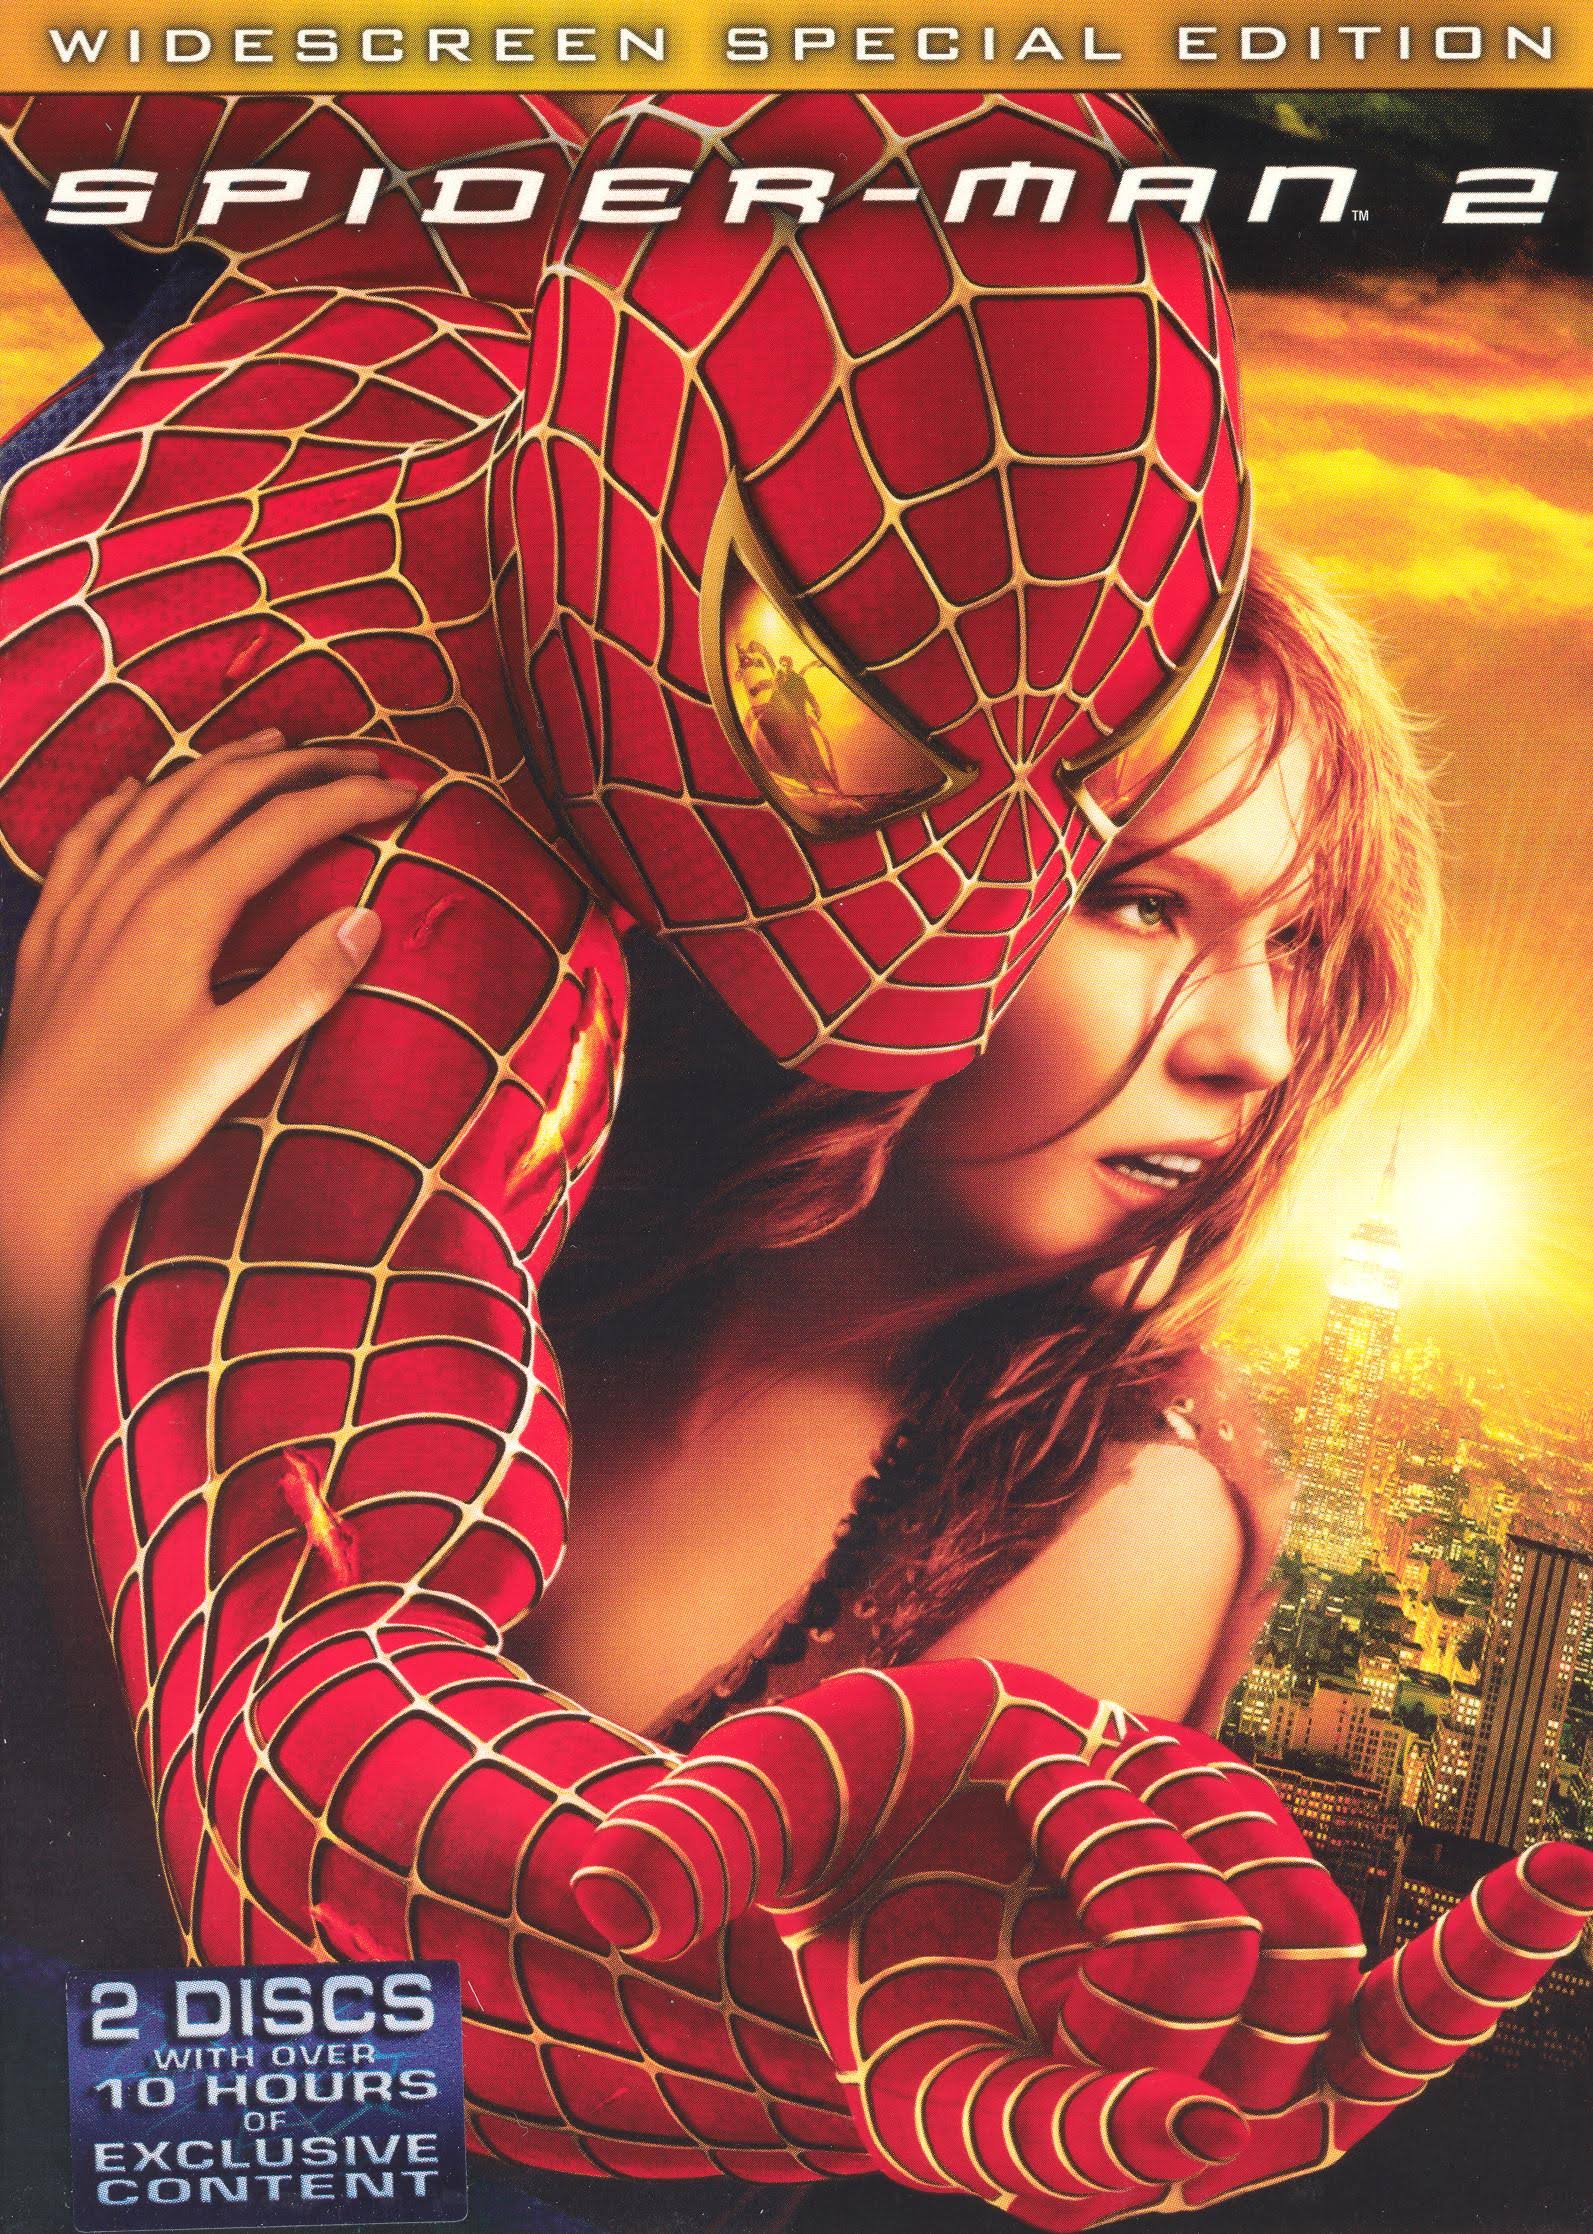 Spider Man 2 Special Edition DVD